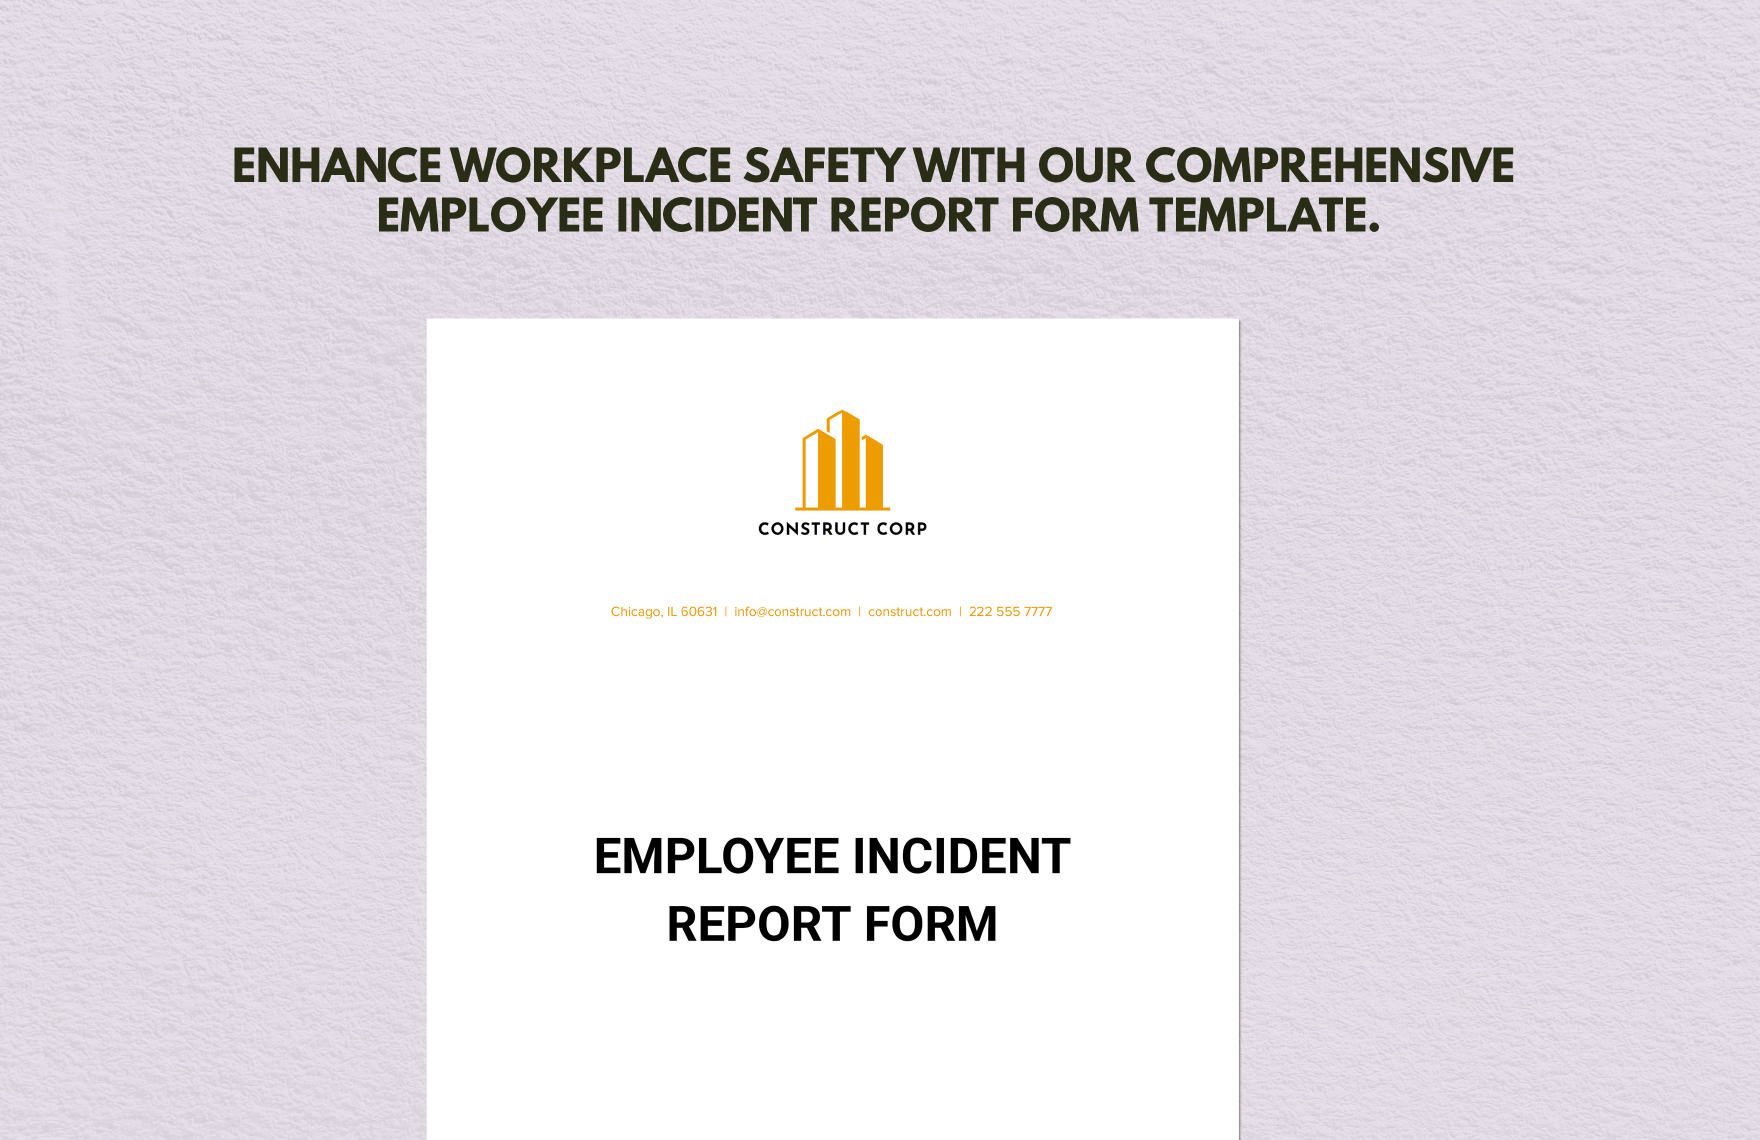 Employee Incident Report Form